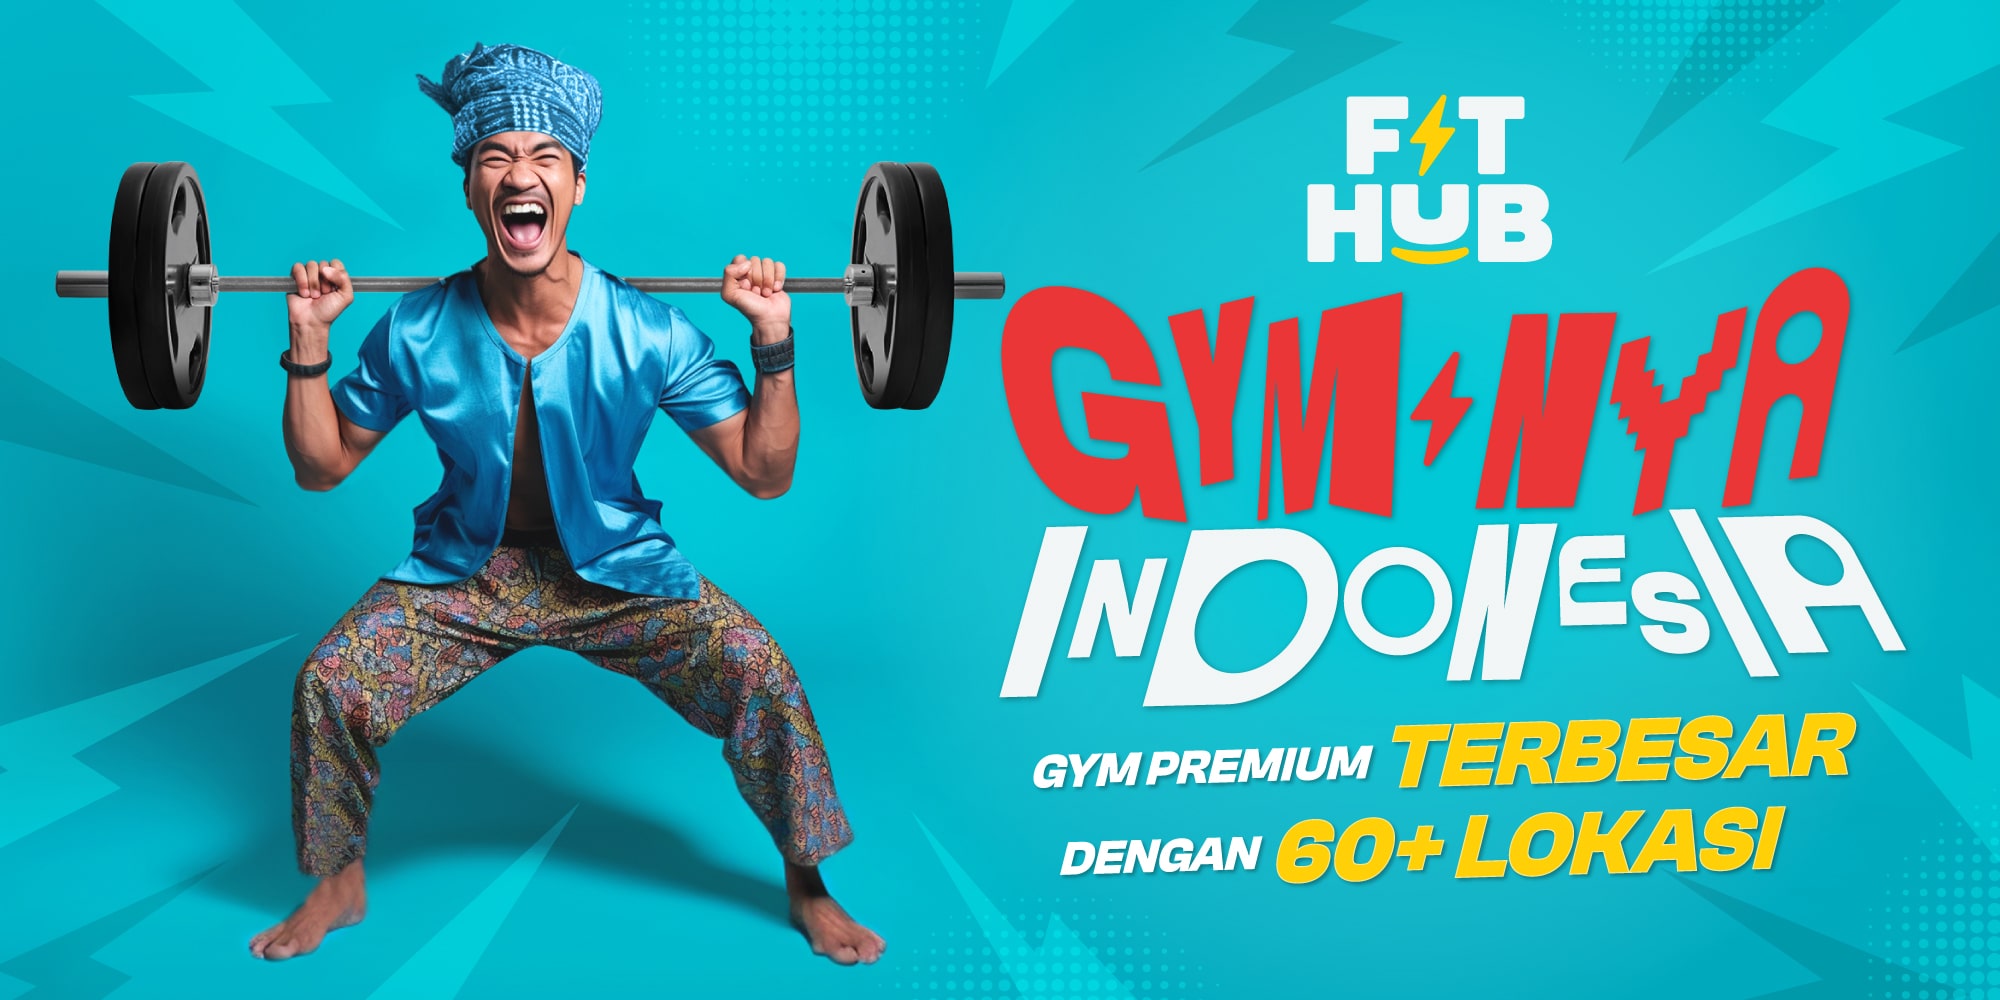 FIT HUB Wujudkan Indonesia Sehat Melalui Kampanye ‘Gym-nya Indonesia’